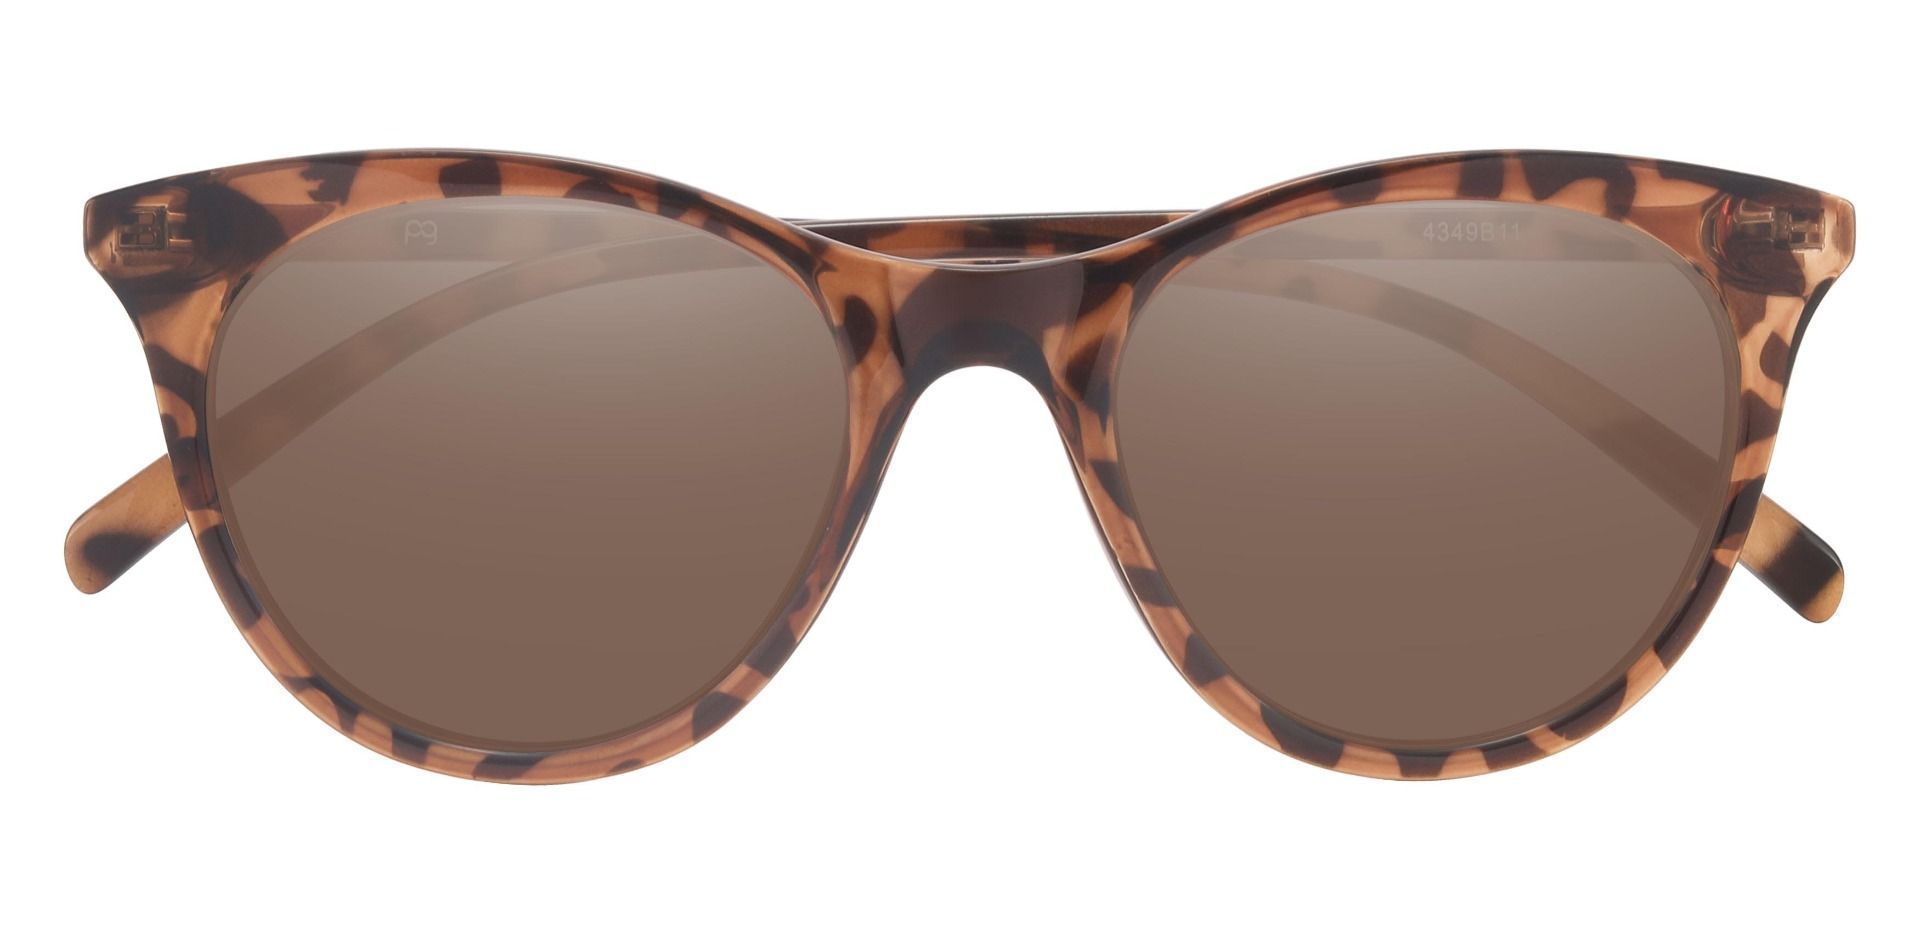 Valencia Cat Eye Prescription Sunglasses - Brown Frame With Brown Lenses